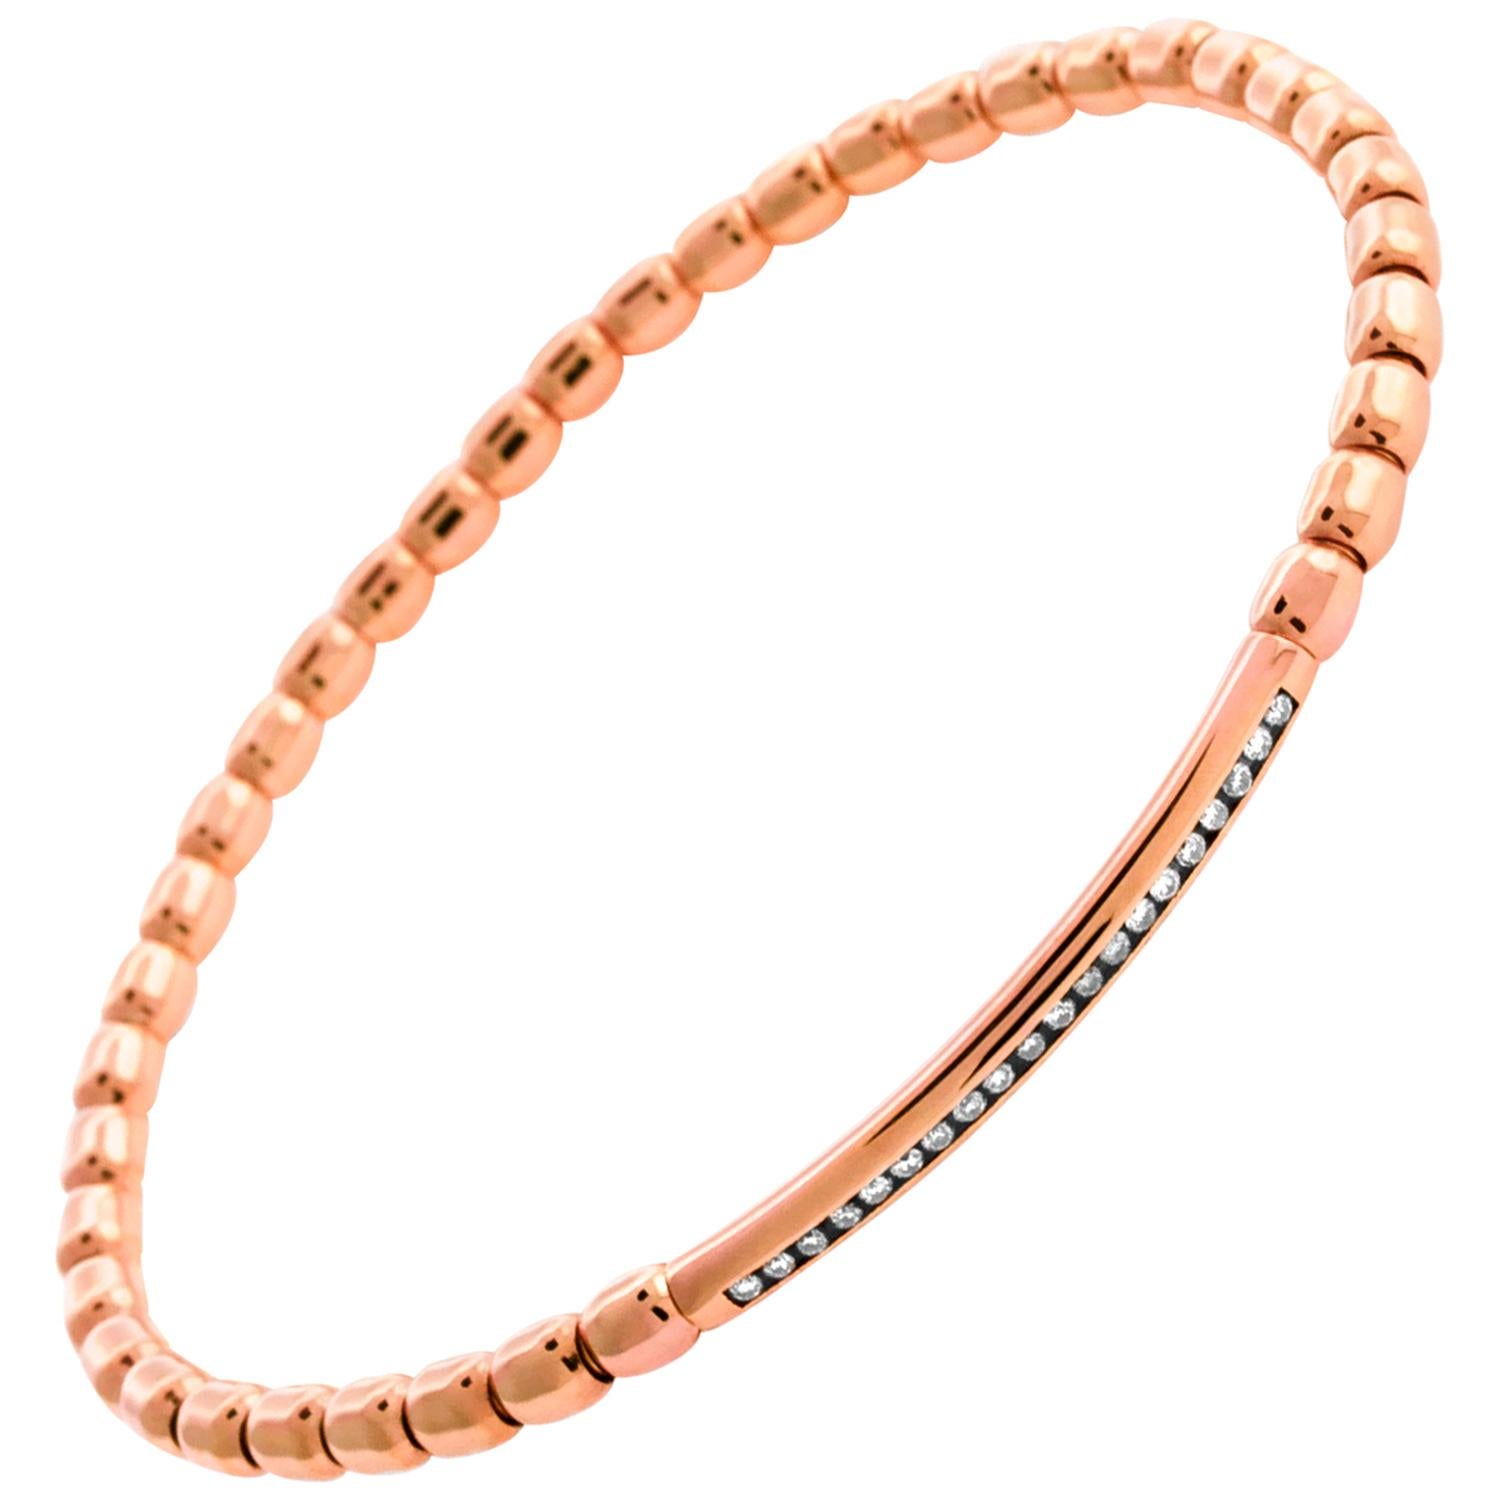 Gold Luxe Bracelet in 18 Karat Rose Gold with White Diamonds - Medium For Sale